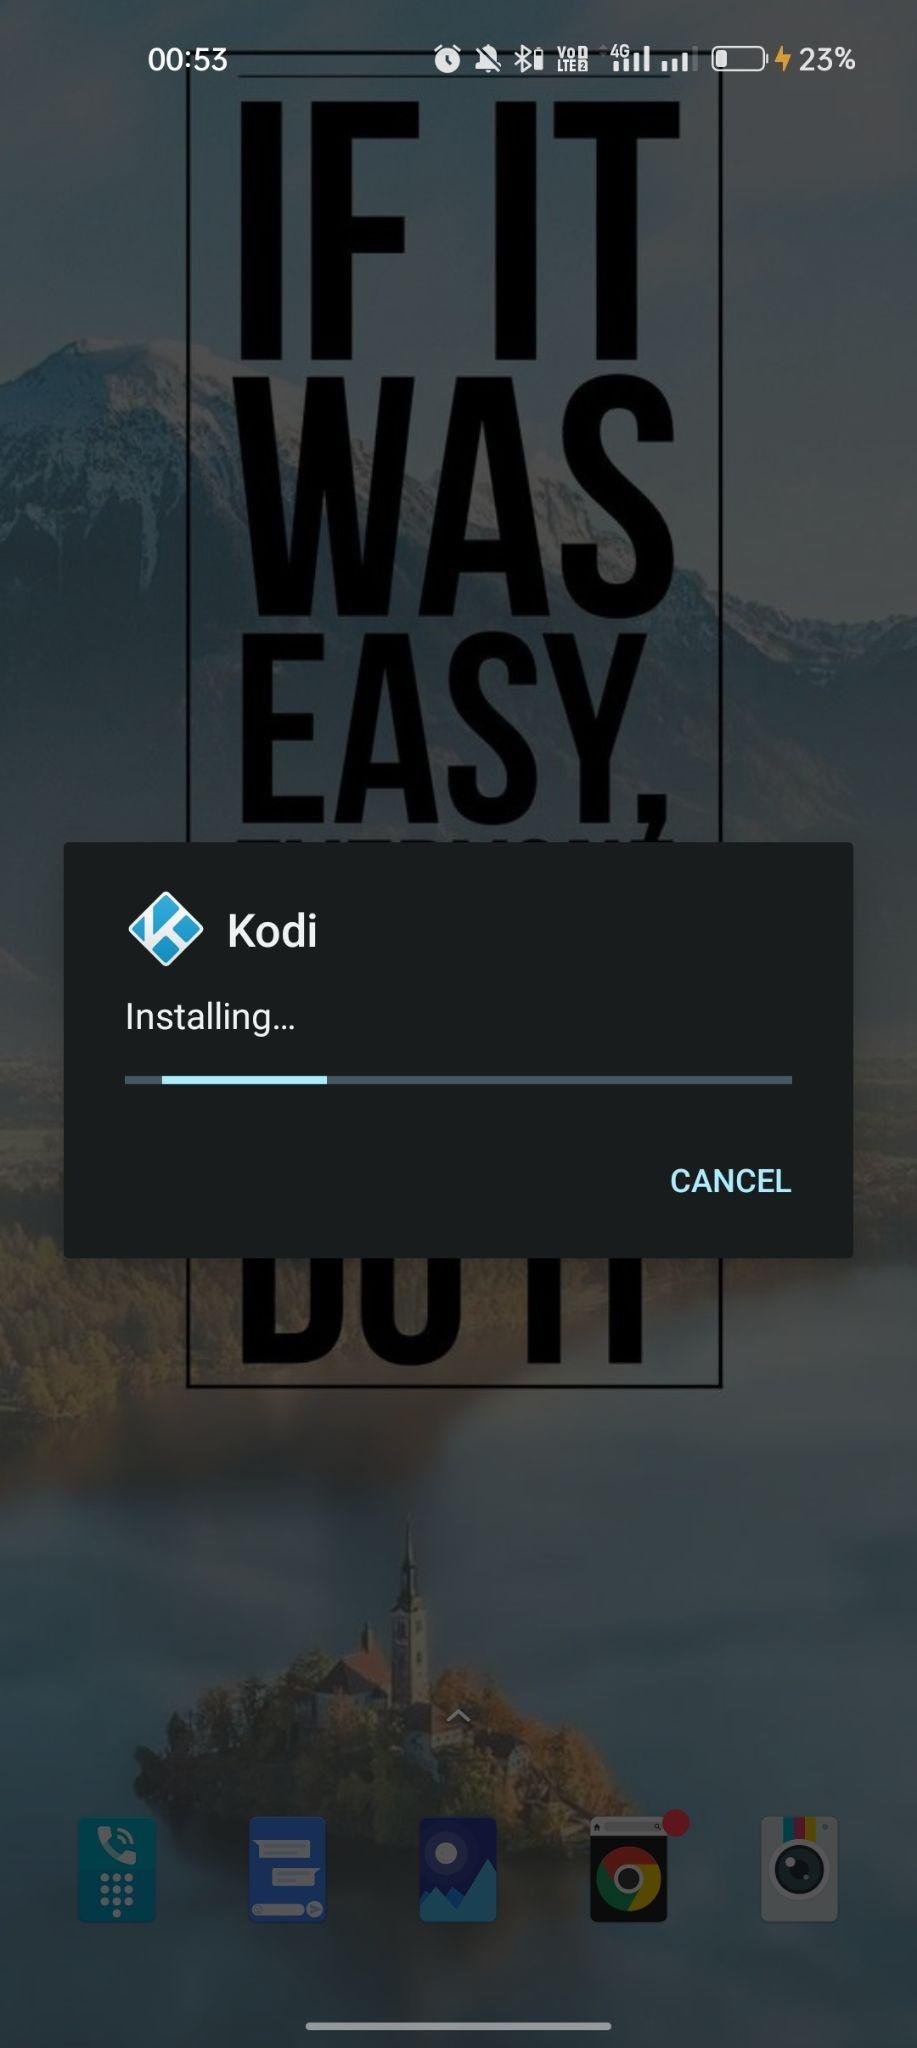 Kodi apk installing